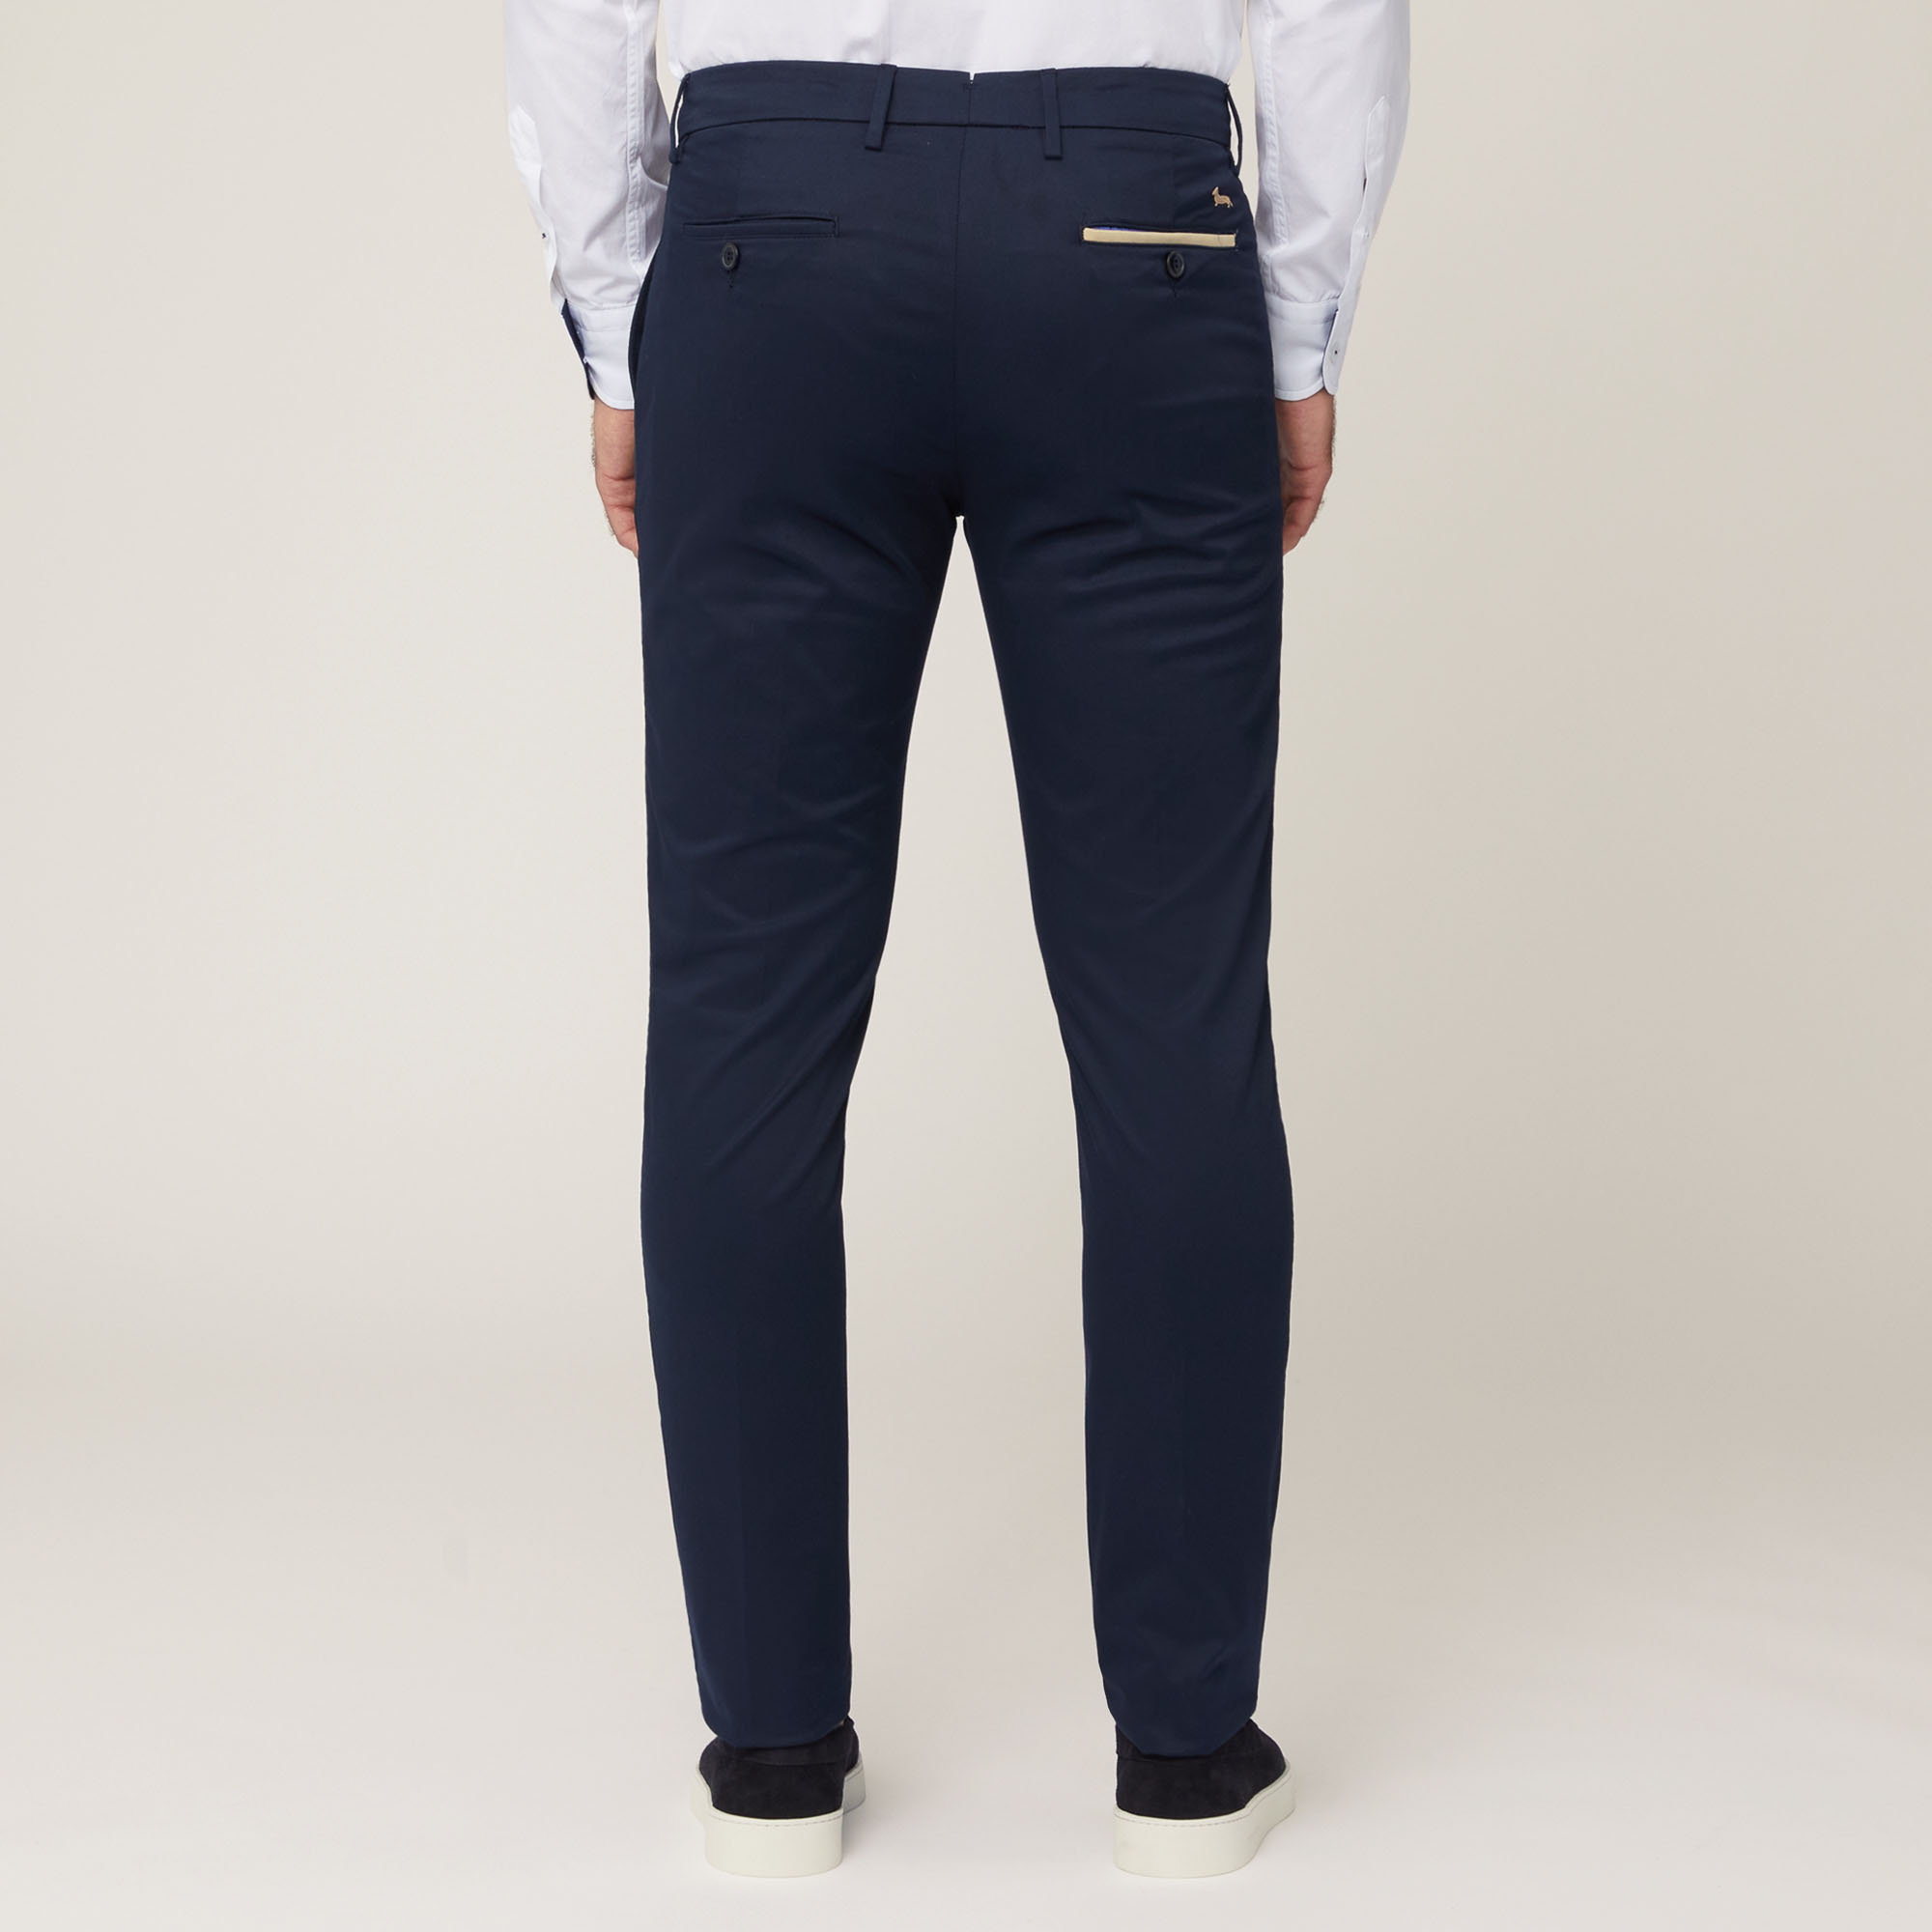 Customized Chino Pants, Blue, large image number 1